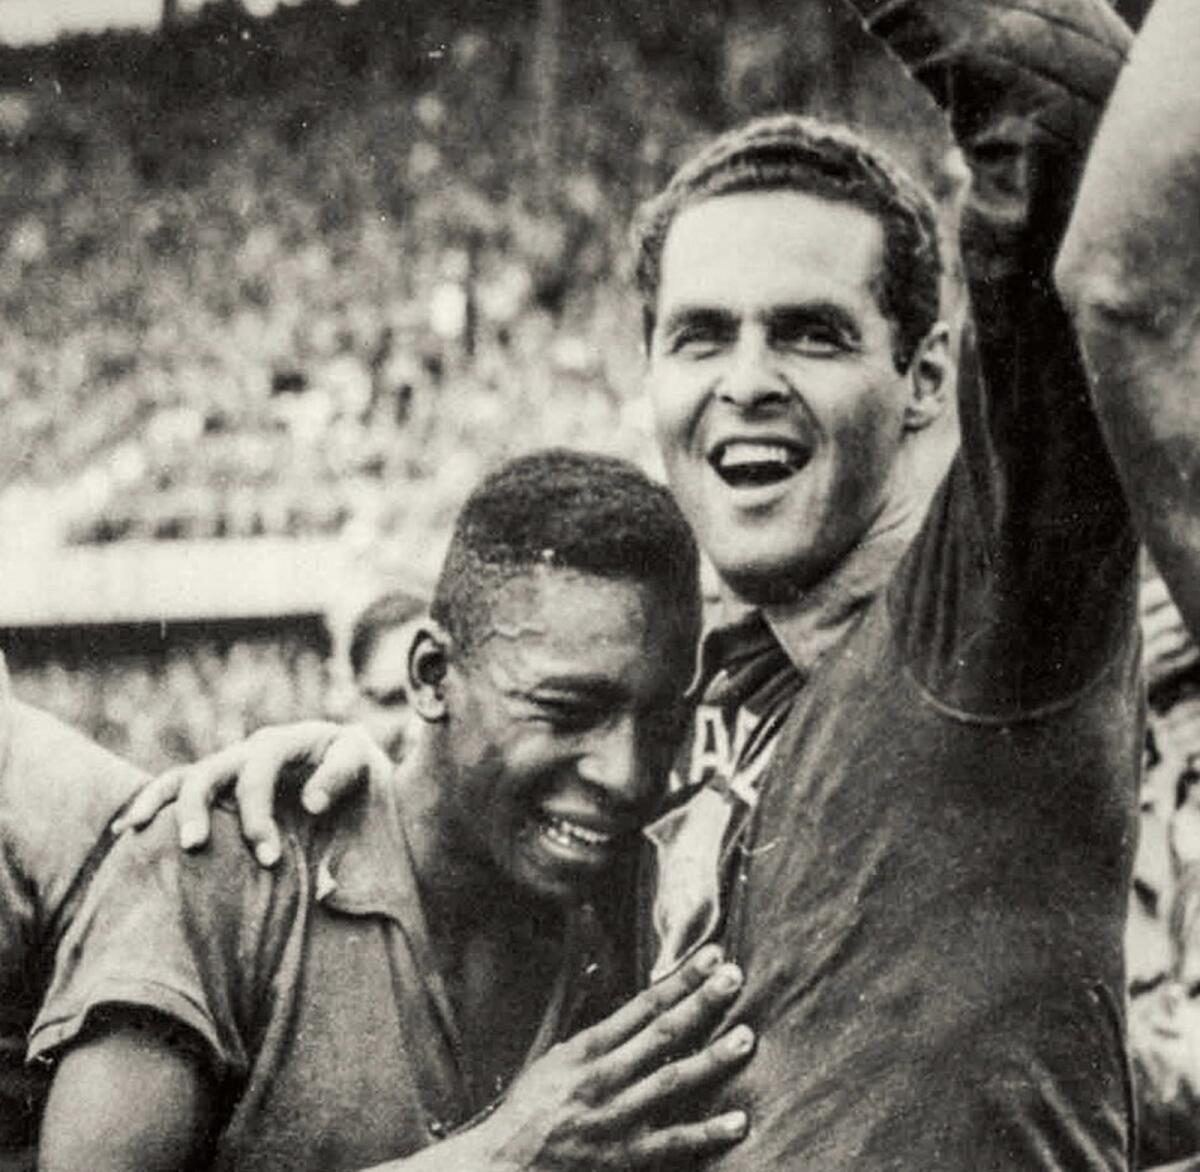 Pele (left) cries after Brazil won the 1958 World Cup final against Sweden. — Twitter